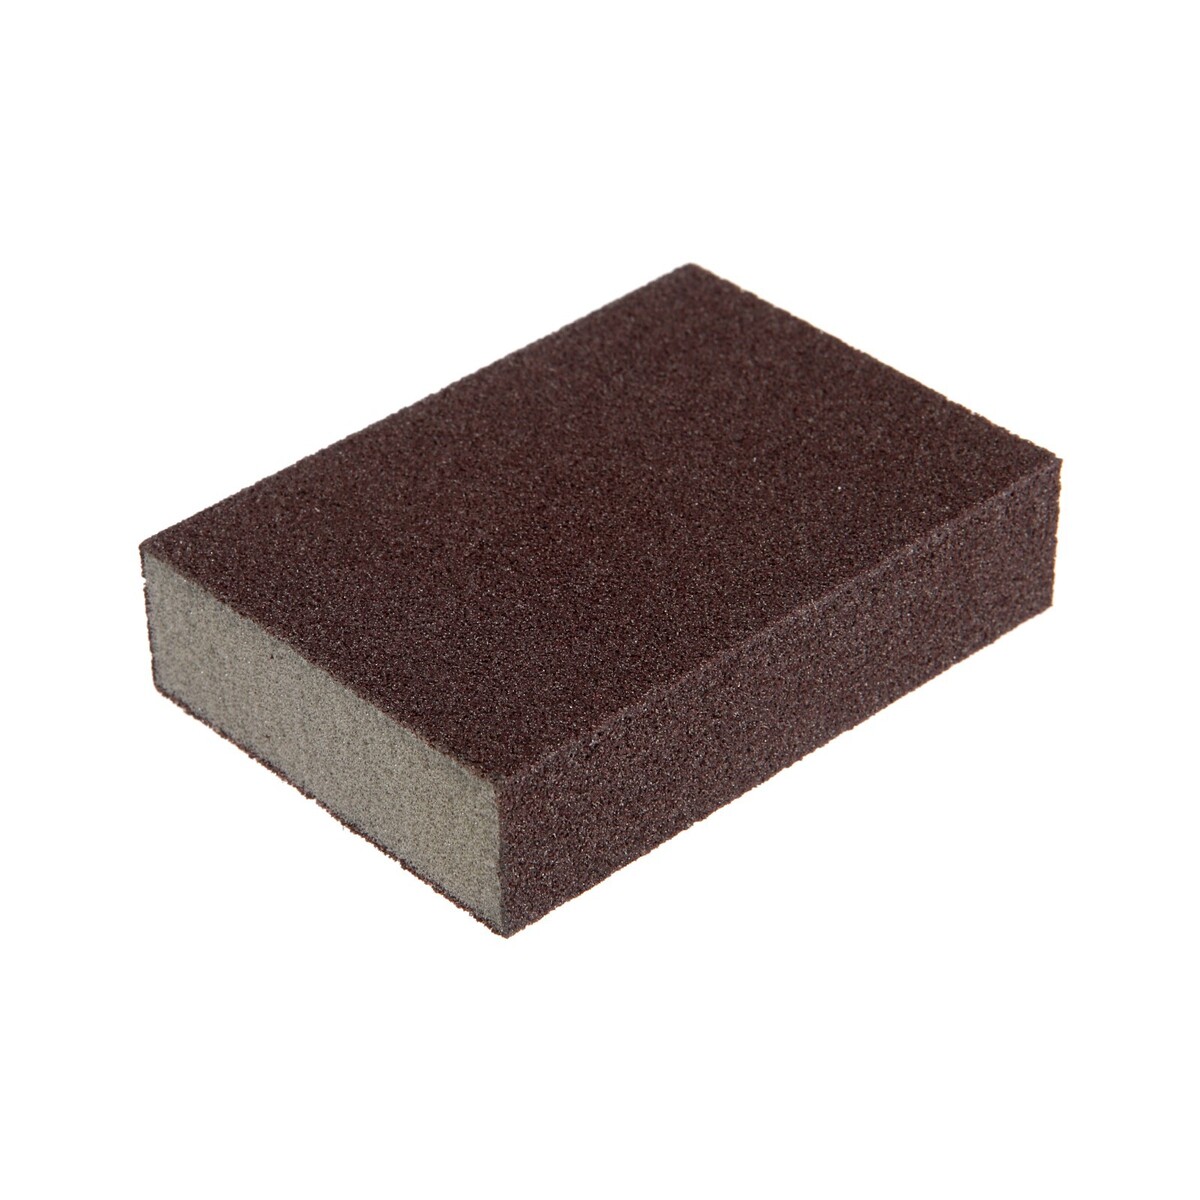 Губка абразивная шлифовальная тундра, твердая, 100 х 70 х 25 мм, p100 губка абразивная для подготовки металла к покраске 10×7×22 5 см р60